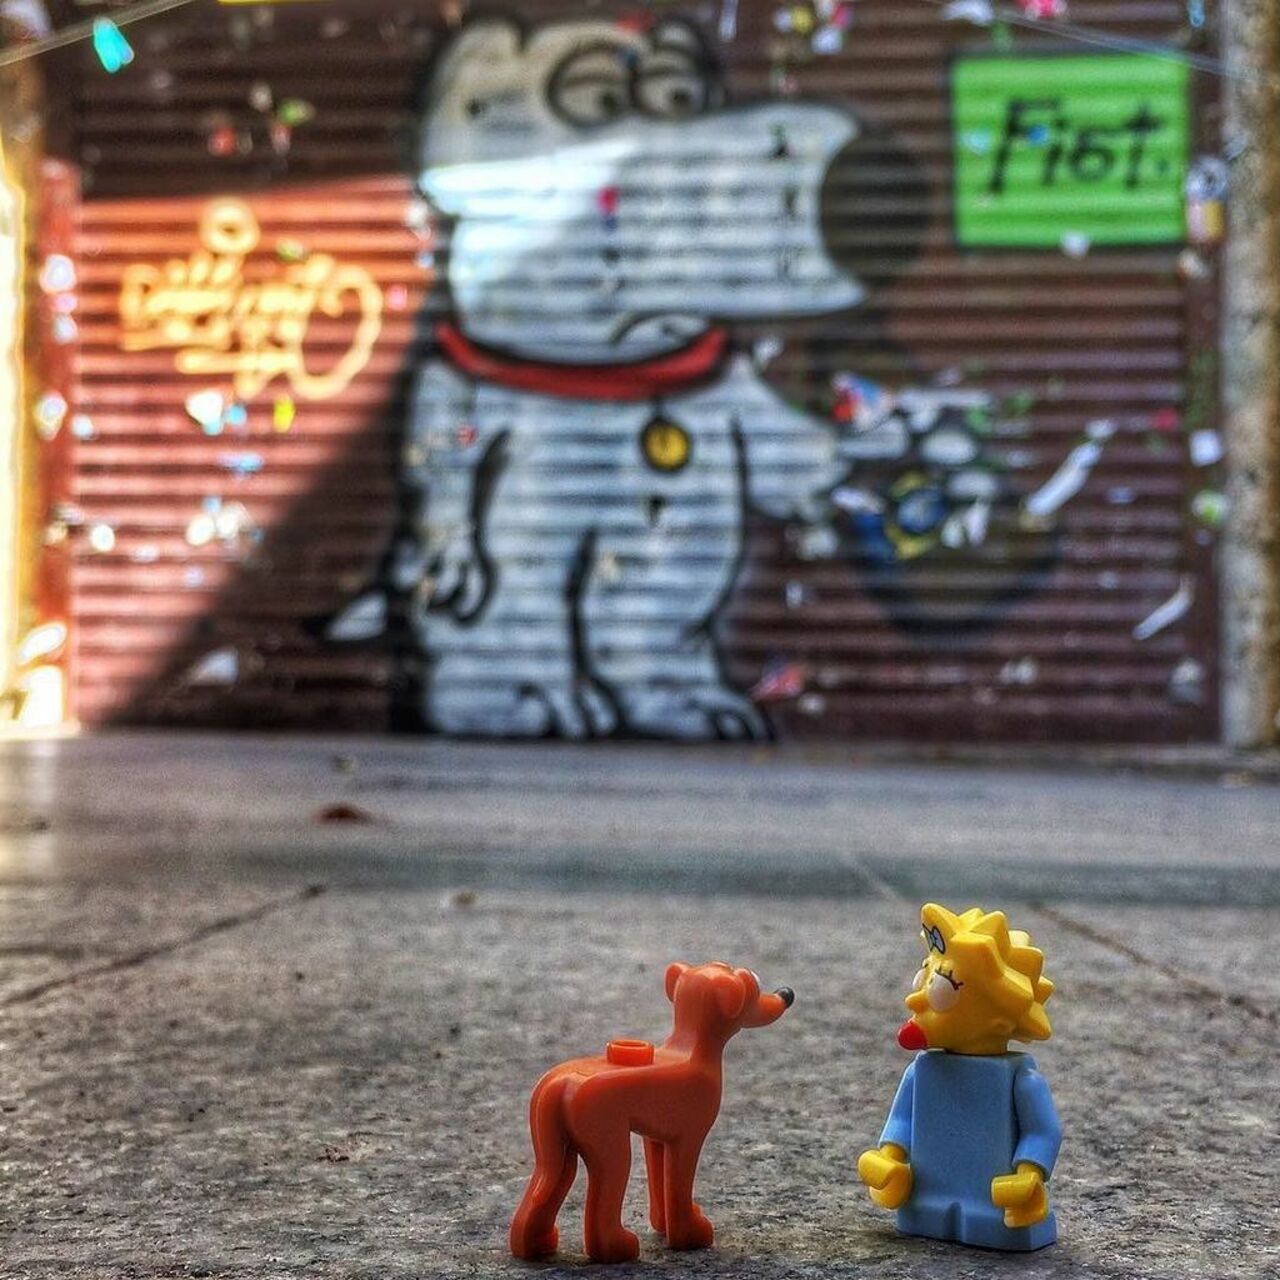 Brian Griffin by @wfist
--
#FamilyGuy #BrianGriffin #simpsons #graffiti #streetart #streetartistanbul #asmalimescit… https://t.co/TrdGLbKEjD